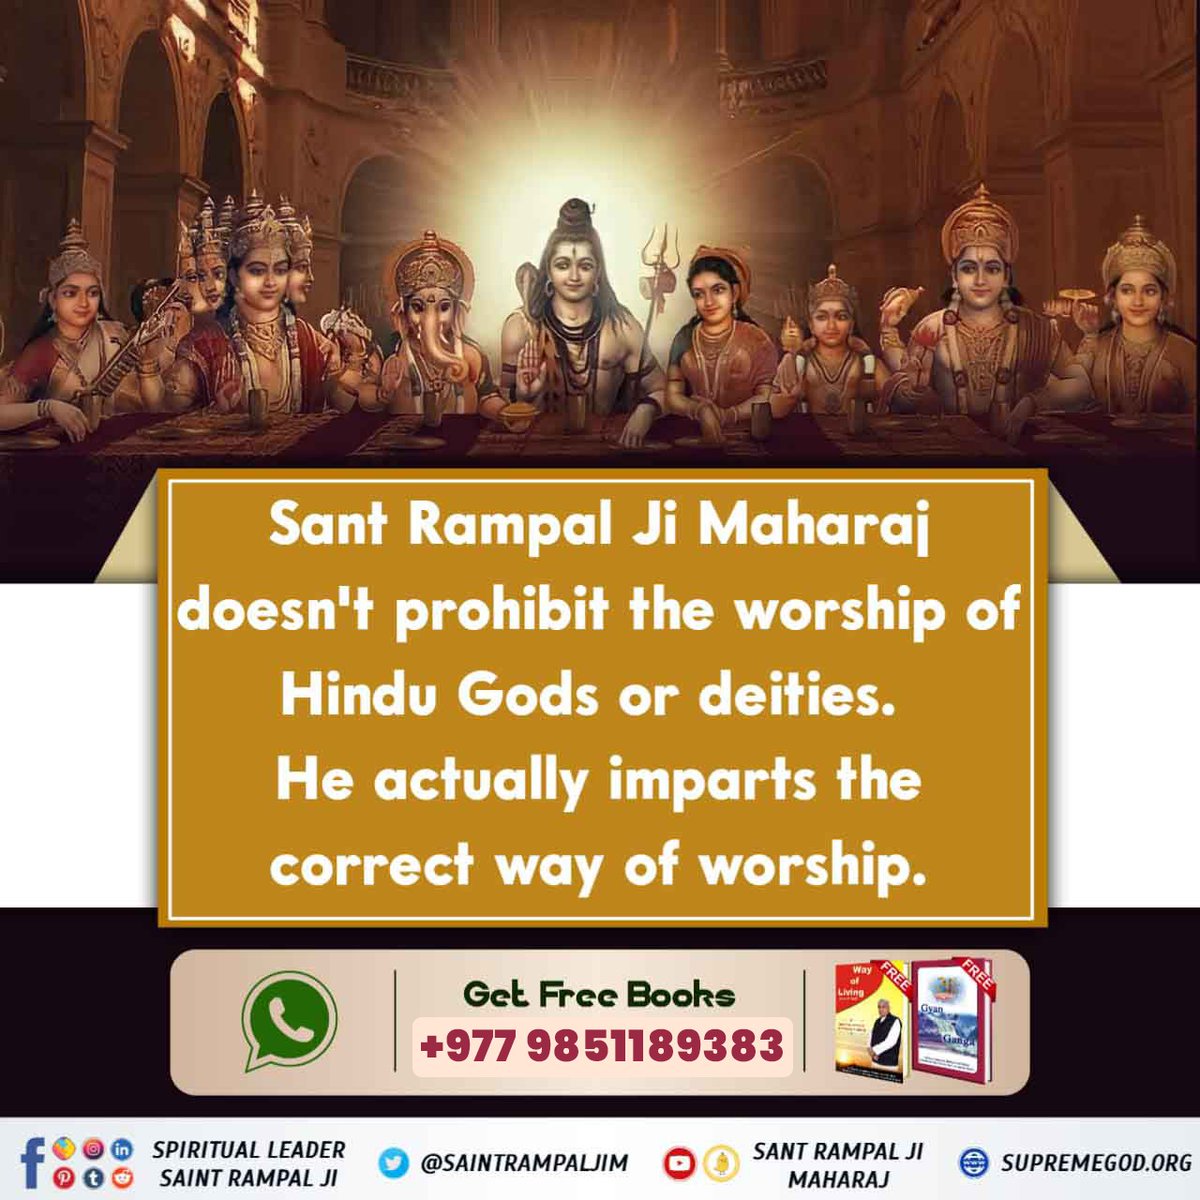 #GodMorningTuesday 
Correct way of worship of Hindu Gods .
#Santrampaljimaharaji